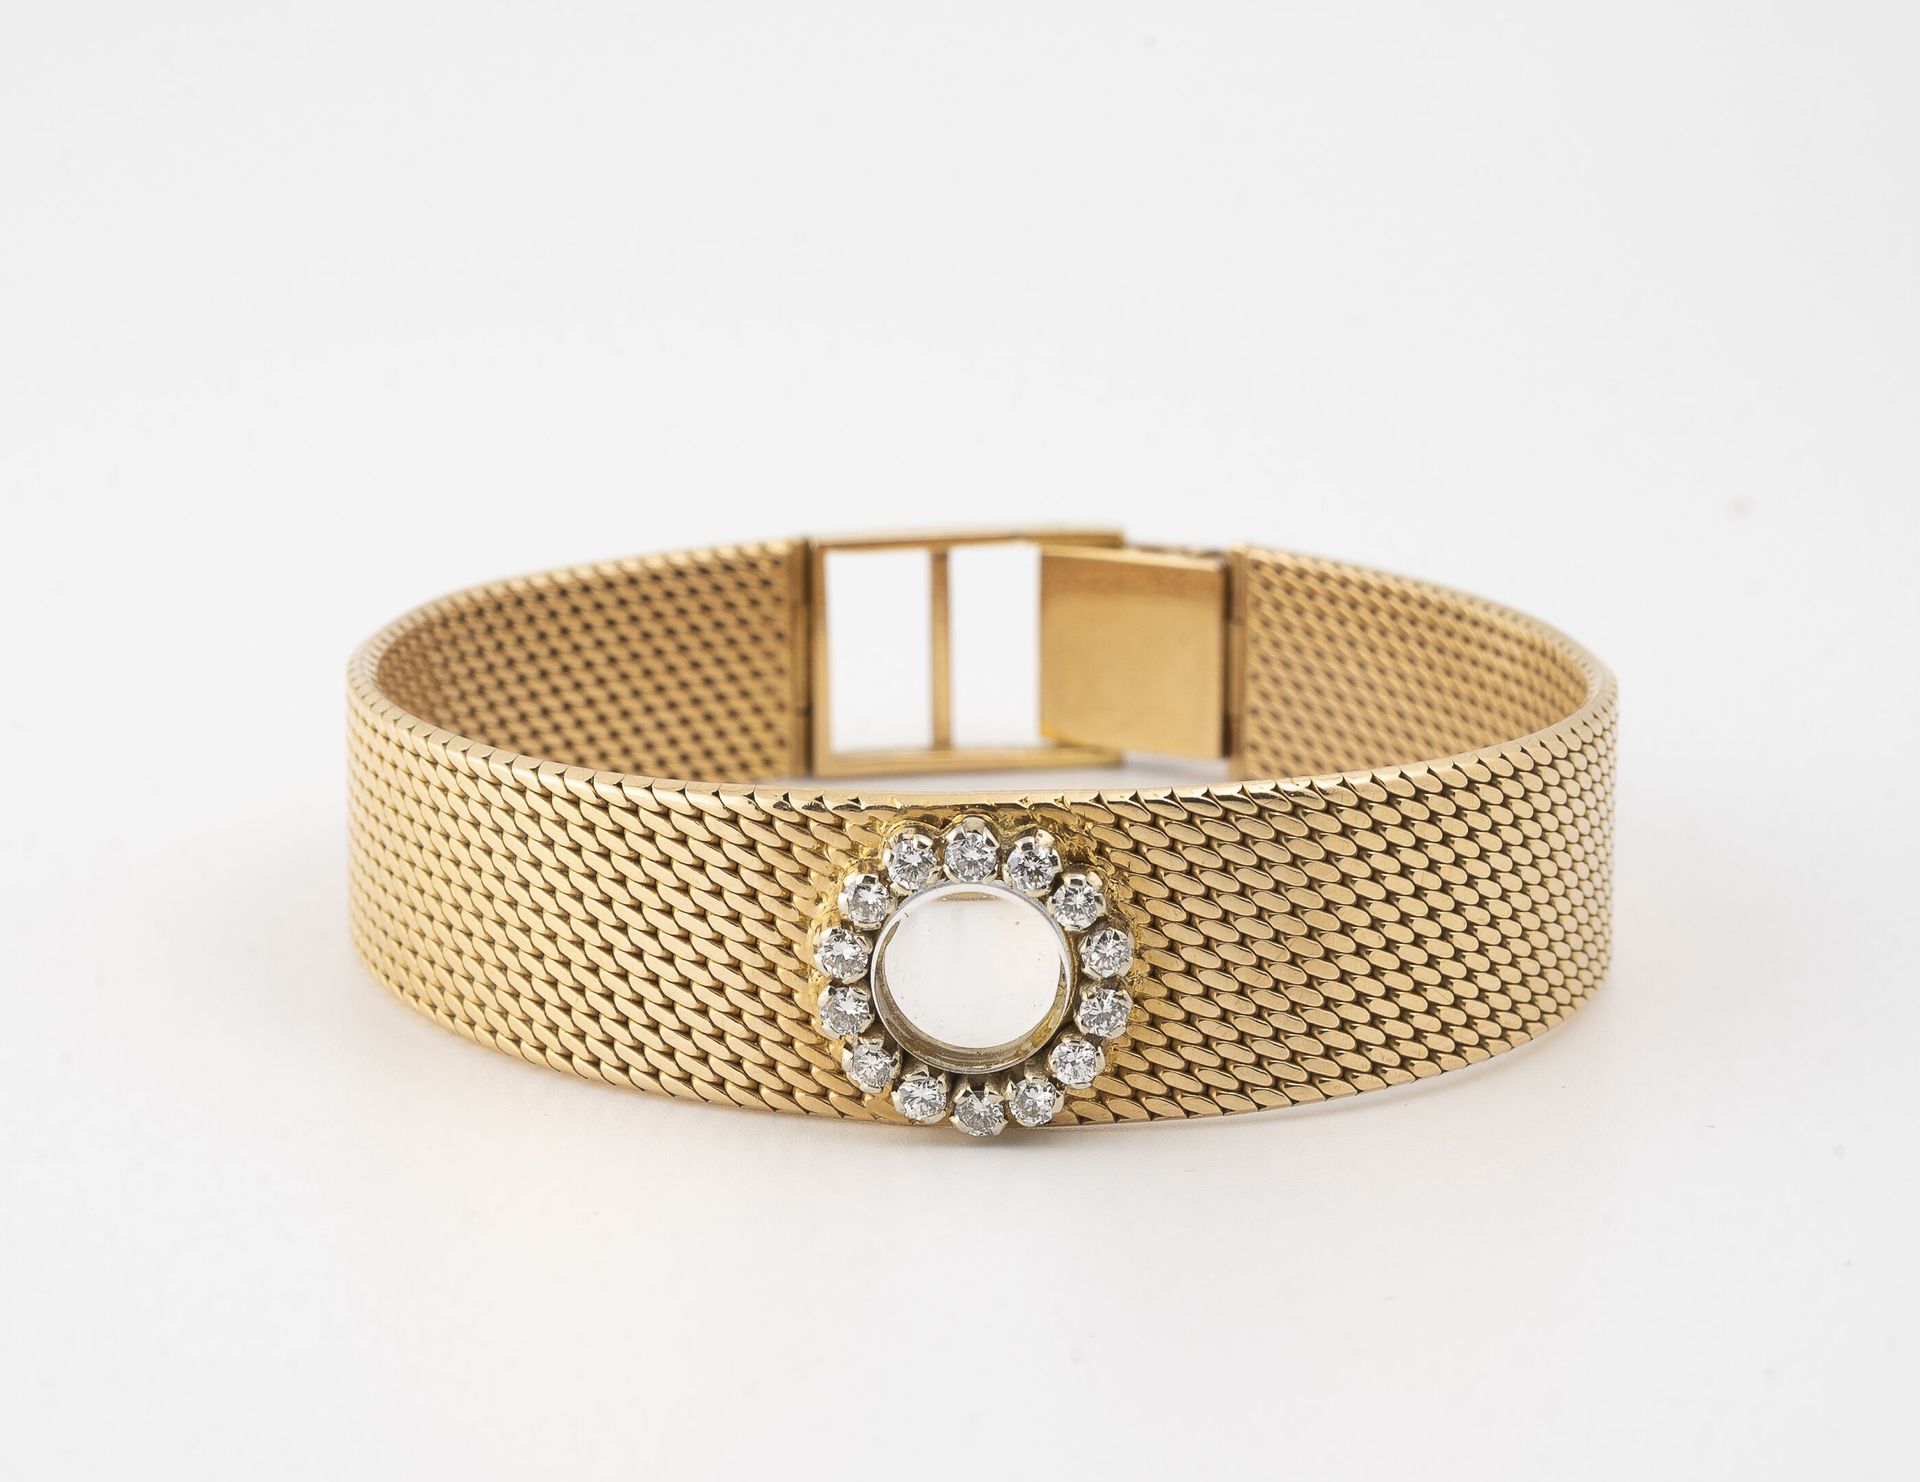 Null Montre bracelet de dame en or jaune (750).

Boîtier rond, lunette sertie de&hellip;